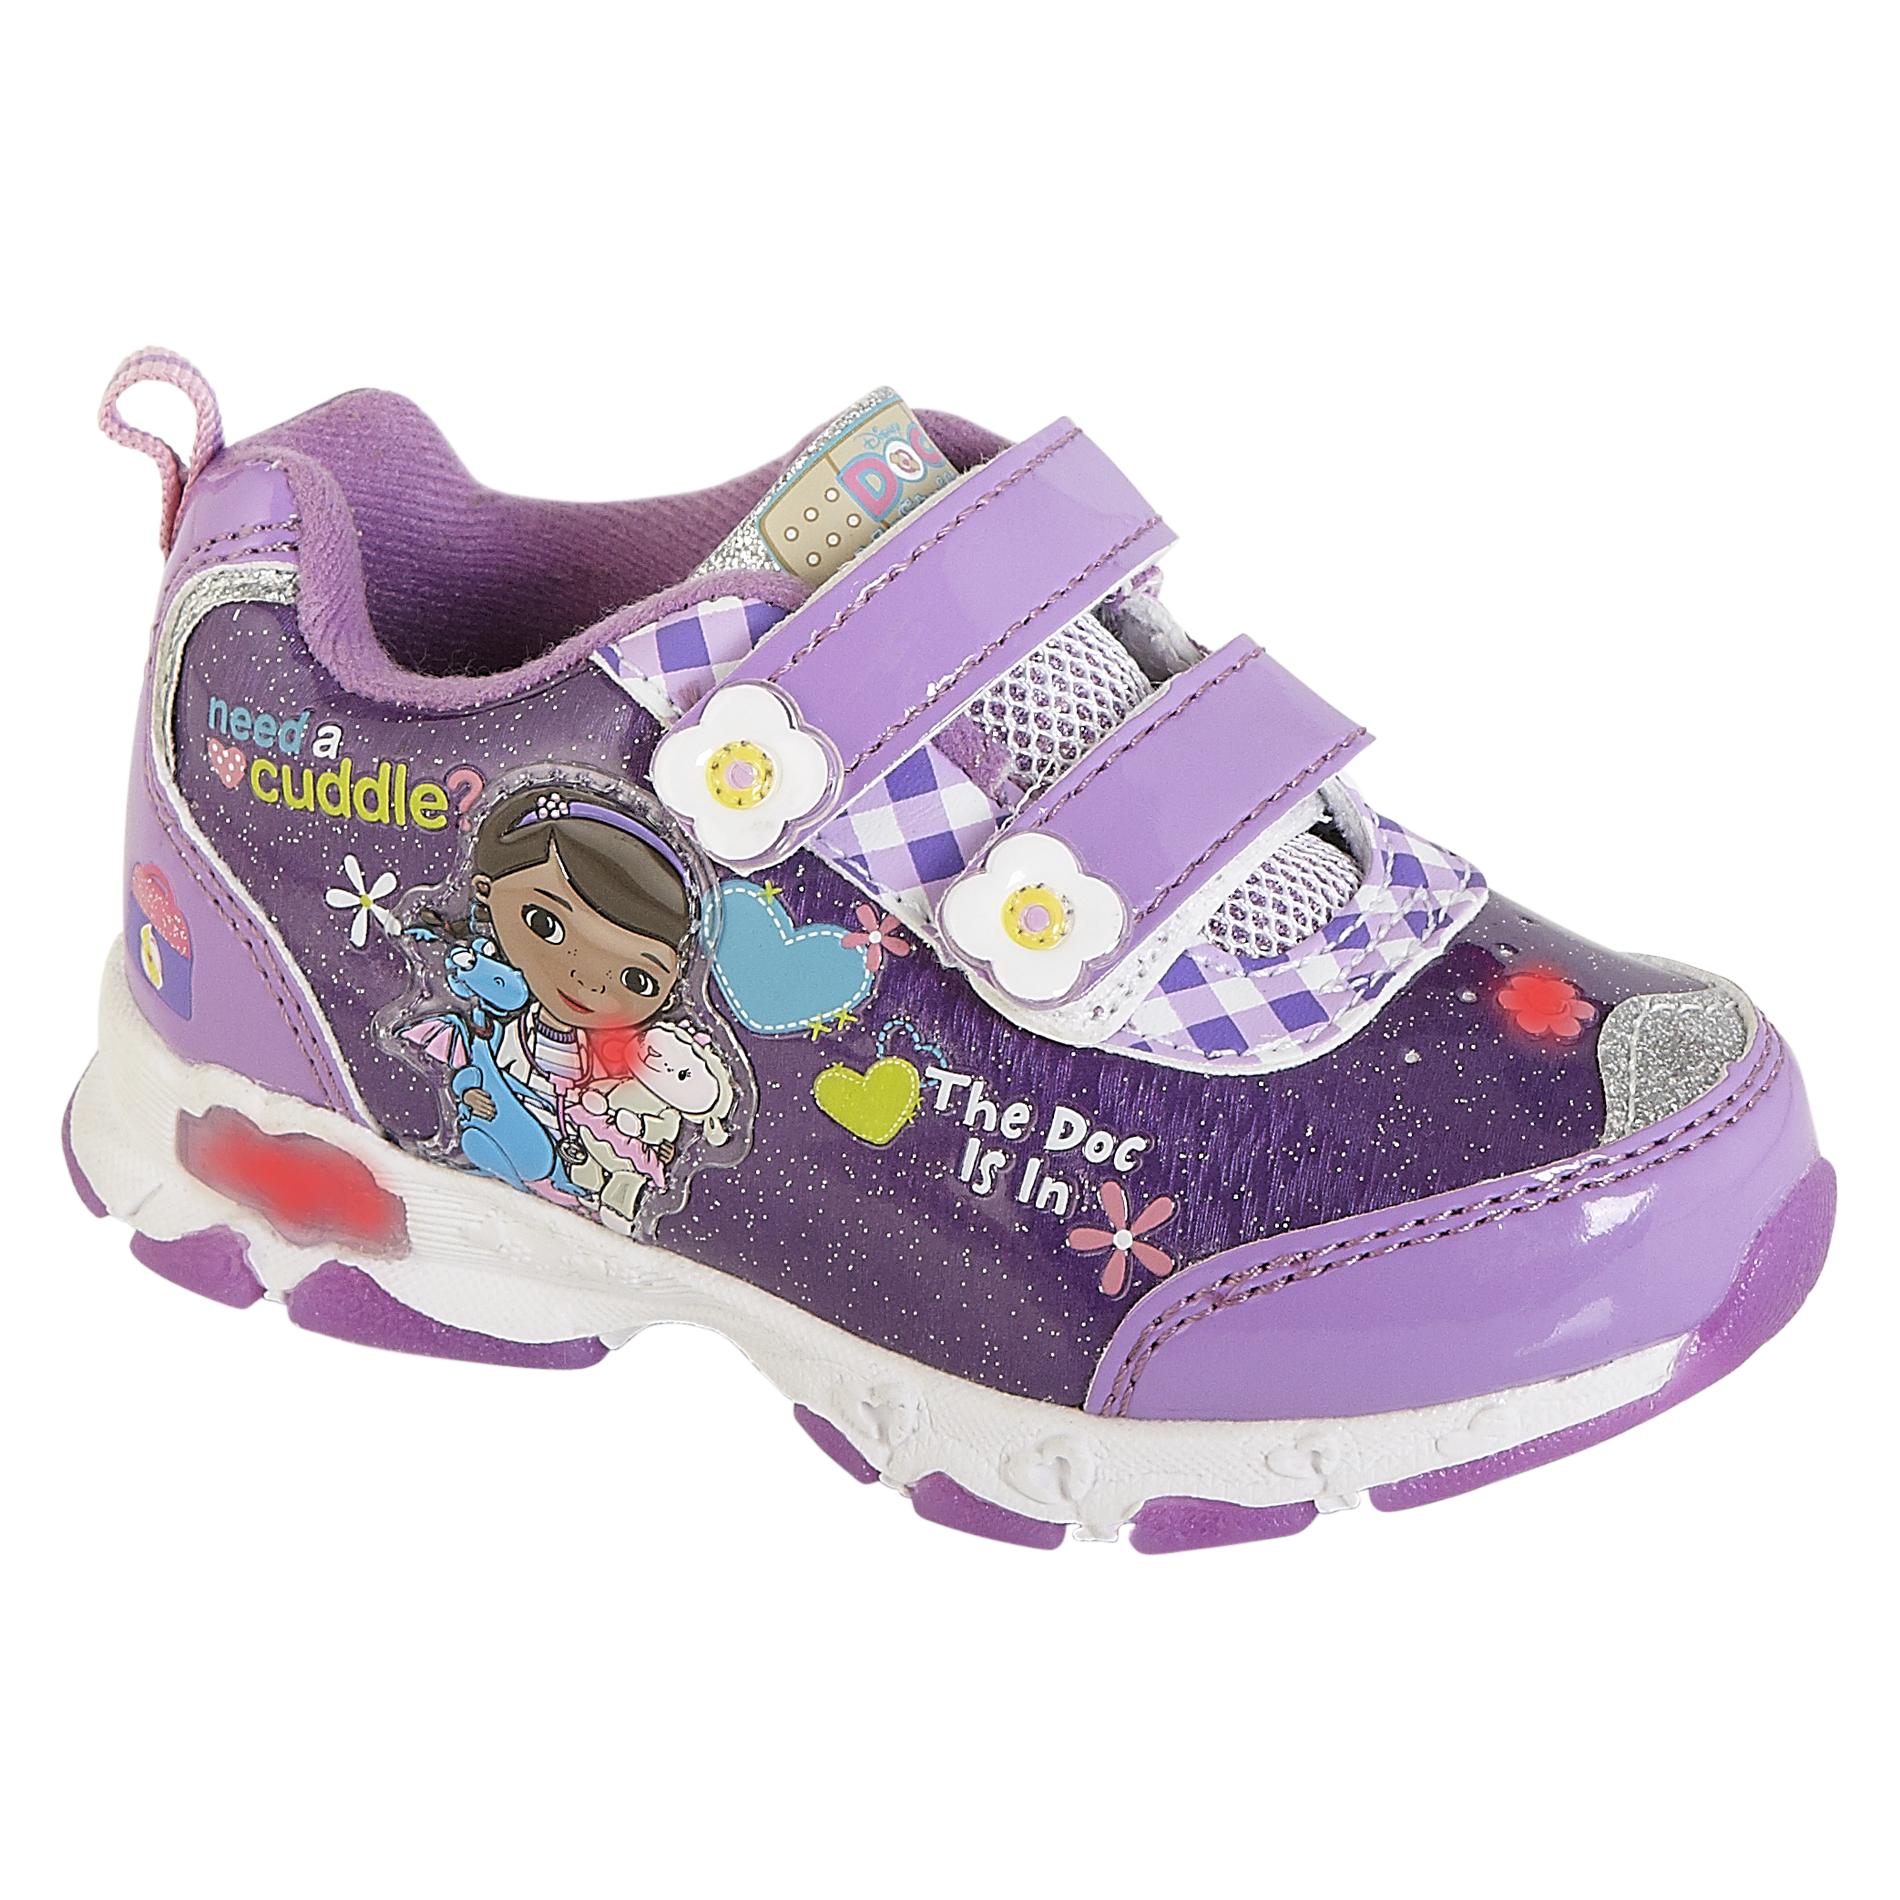 Disney Toddler Girl's Jogger Doc McStuffins - Purple